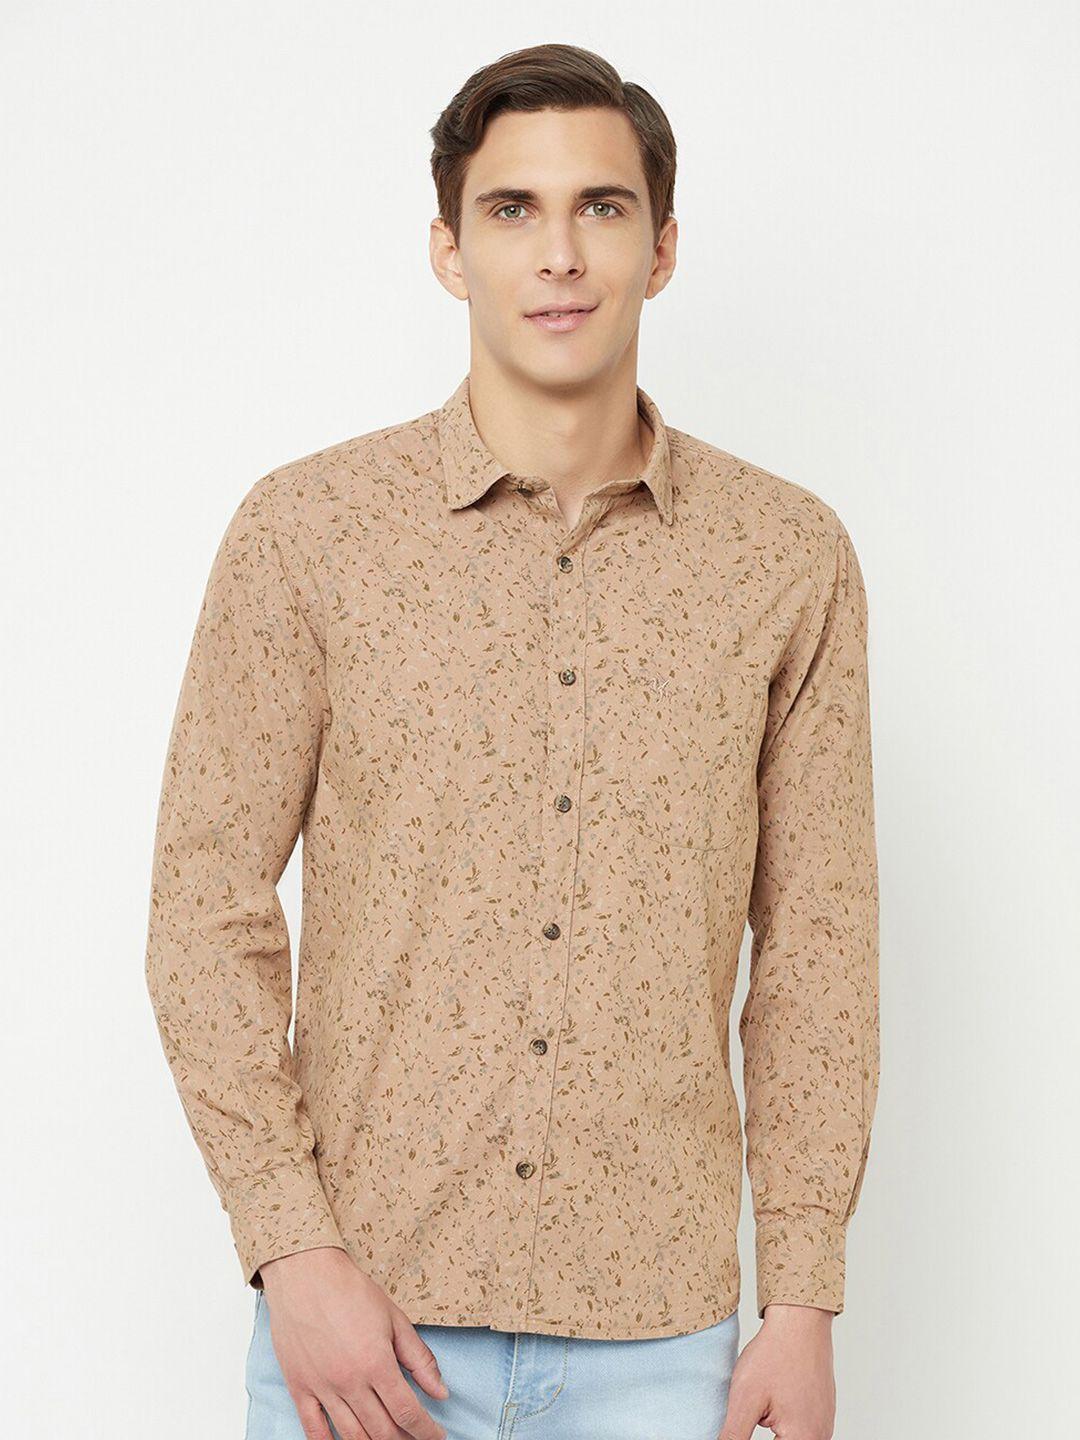 cantabil abstract printed cotton casual shirt